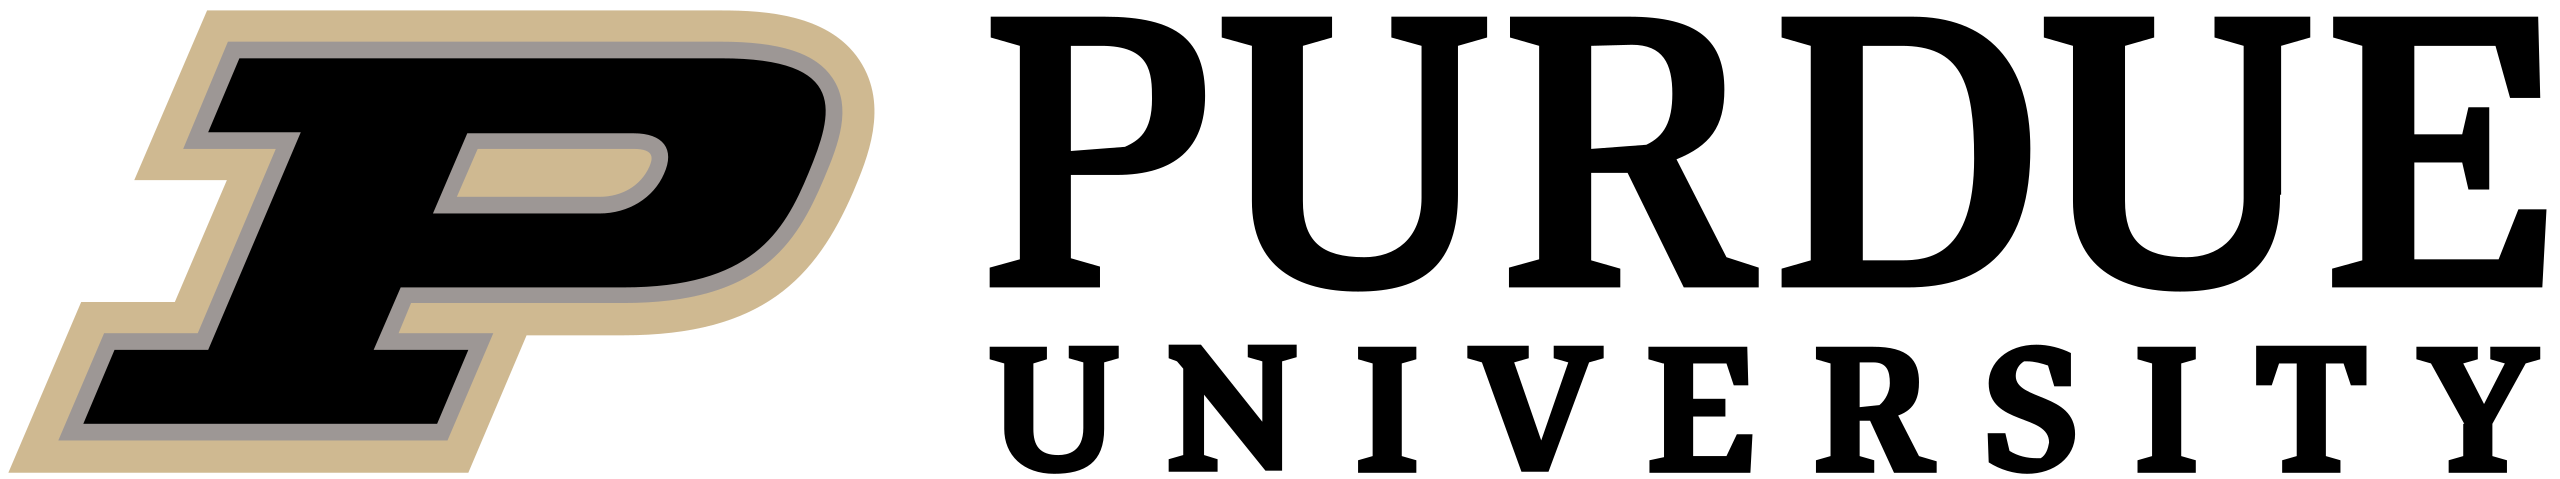 Purdue_University_system_logo.svg (1)